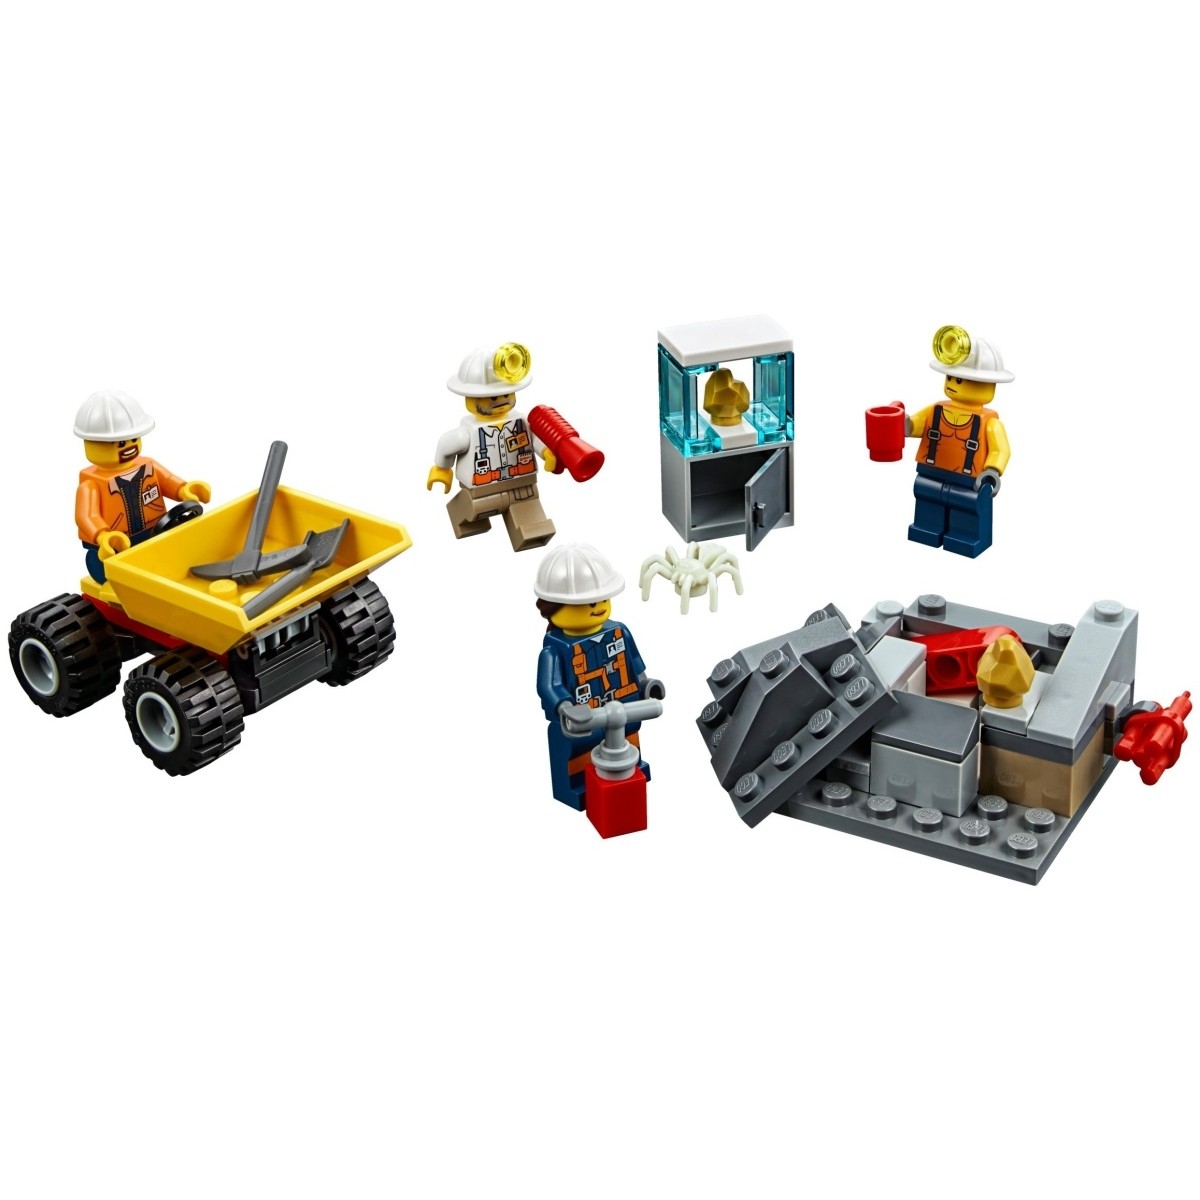 Конструктор Lego Mining Team 60184